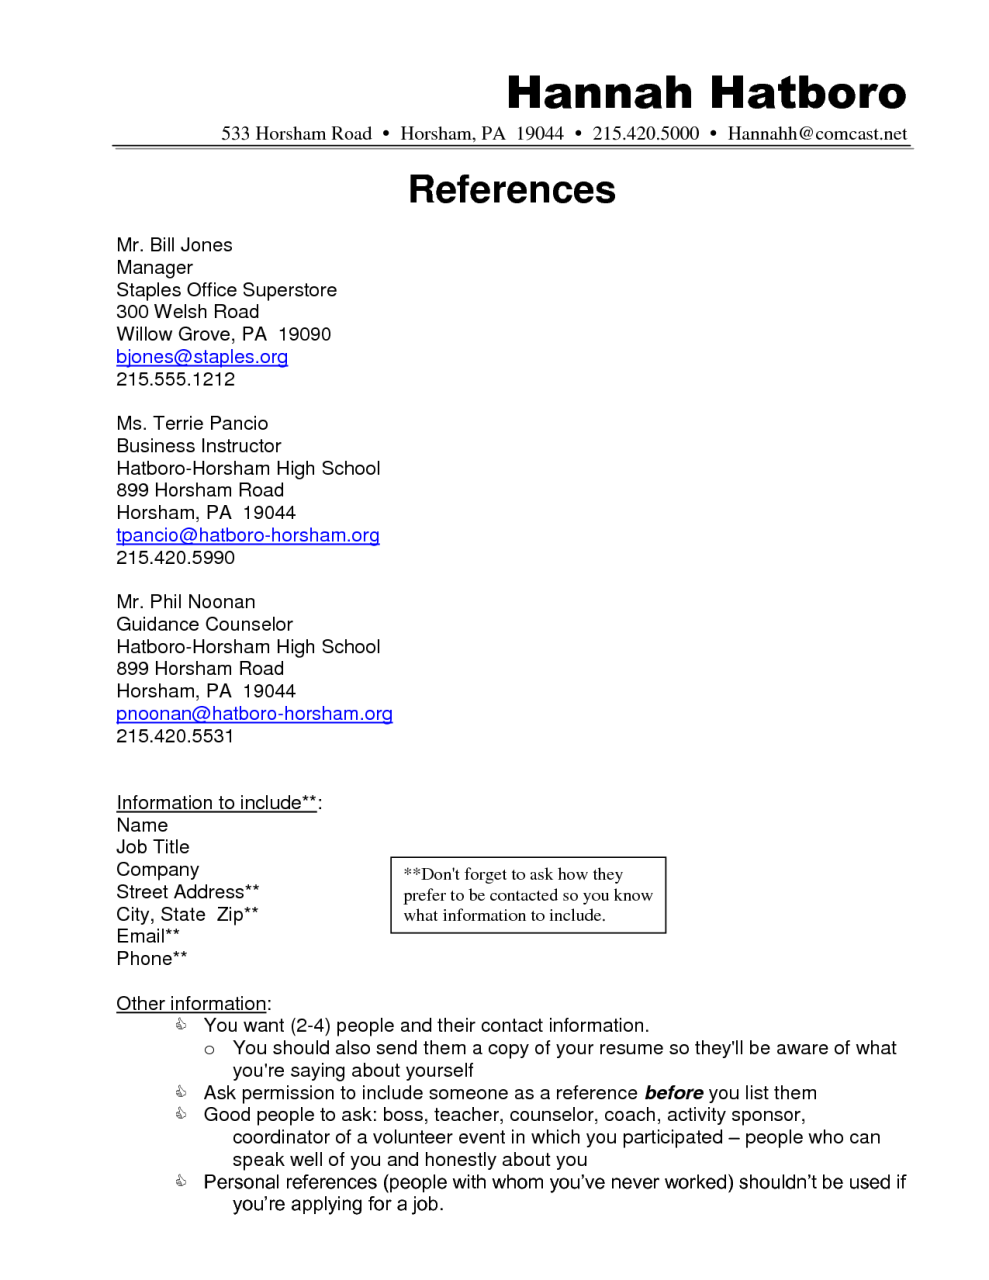 Resume Format References , ResumeFormat ResumeExamplesReferences